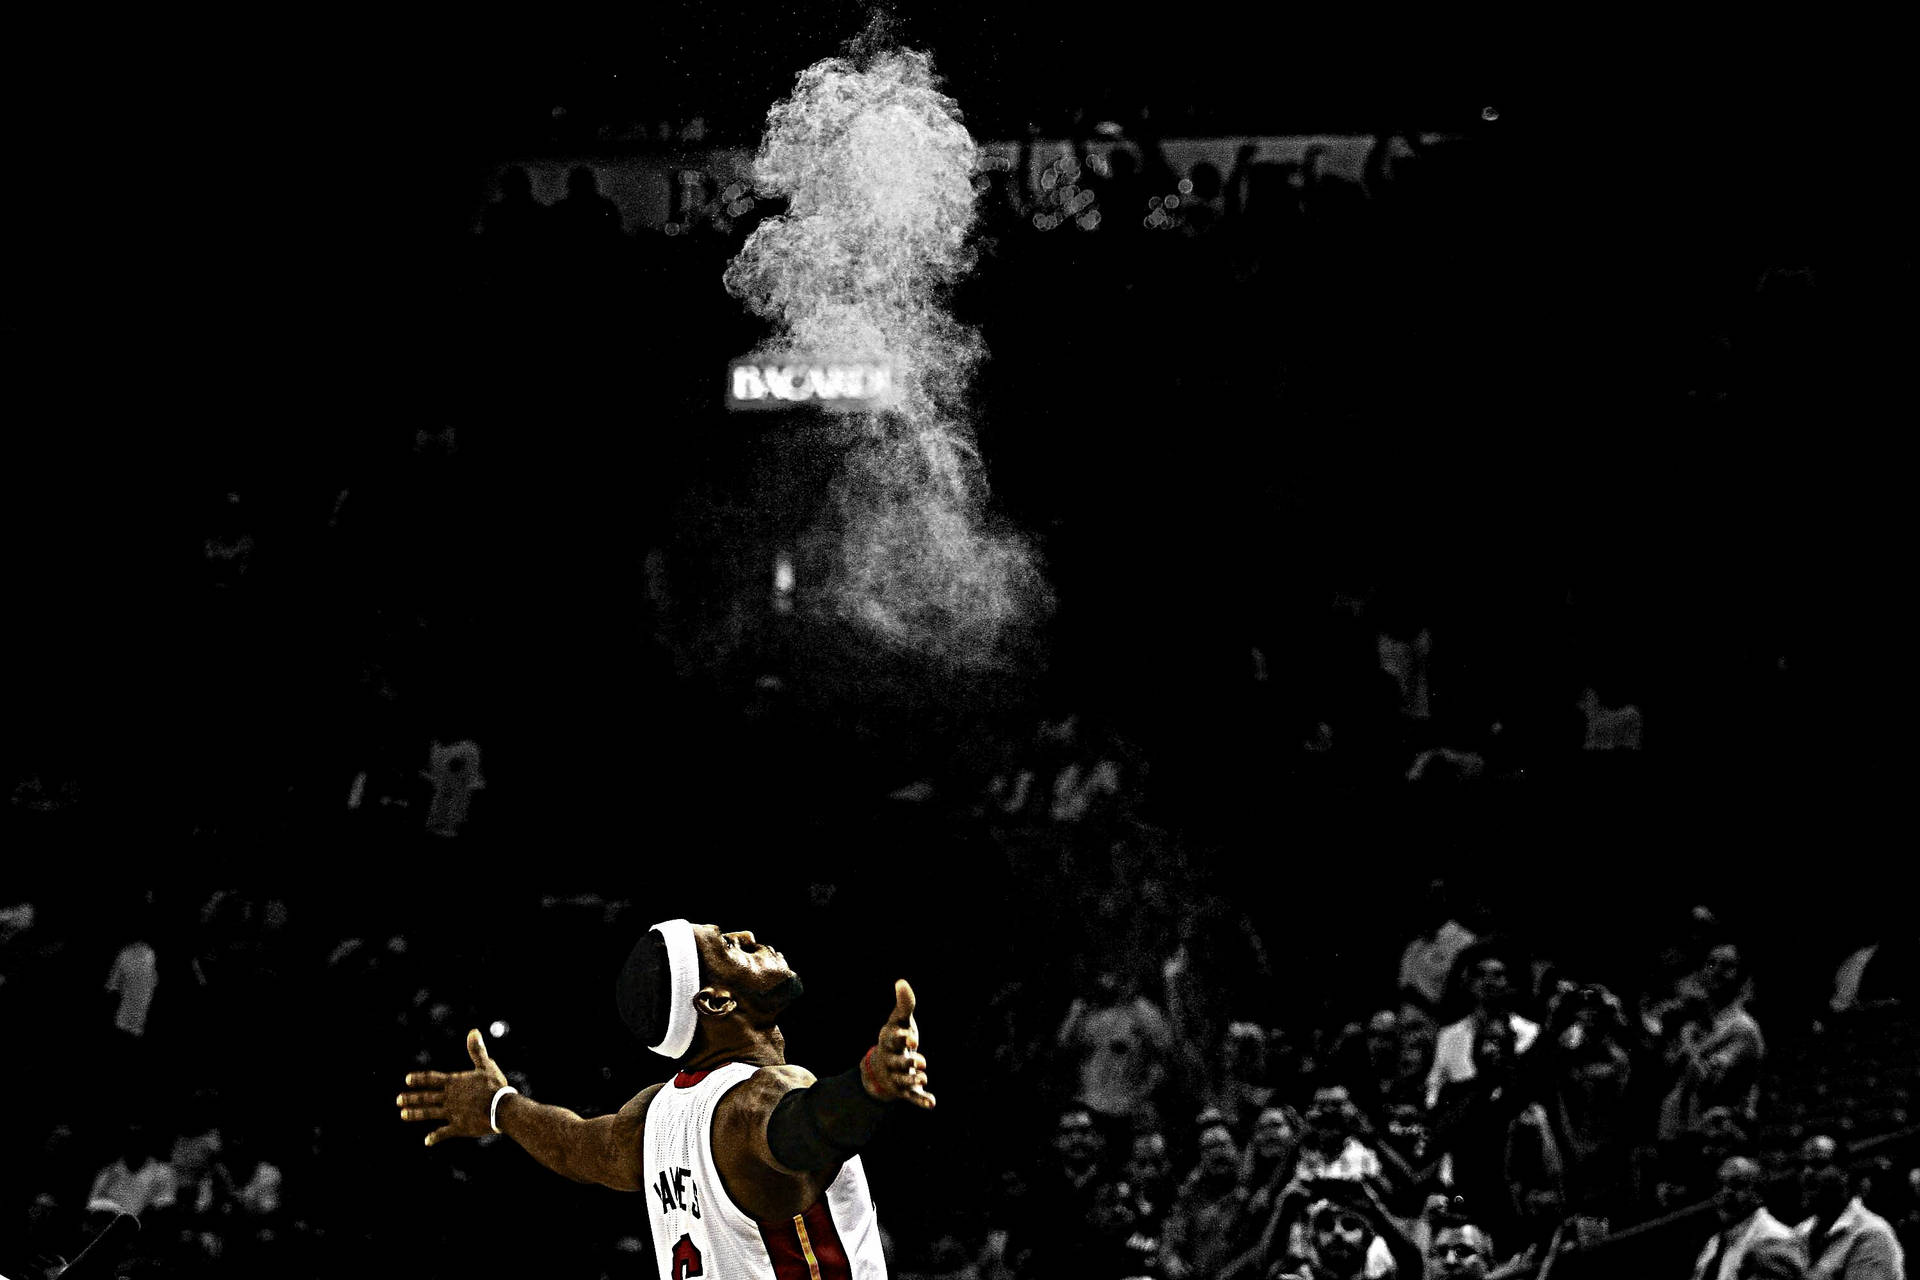 Lebron James dunking during an NBA game Wallpaper